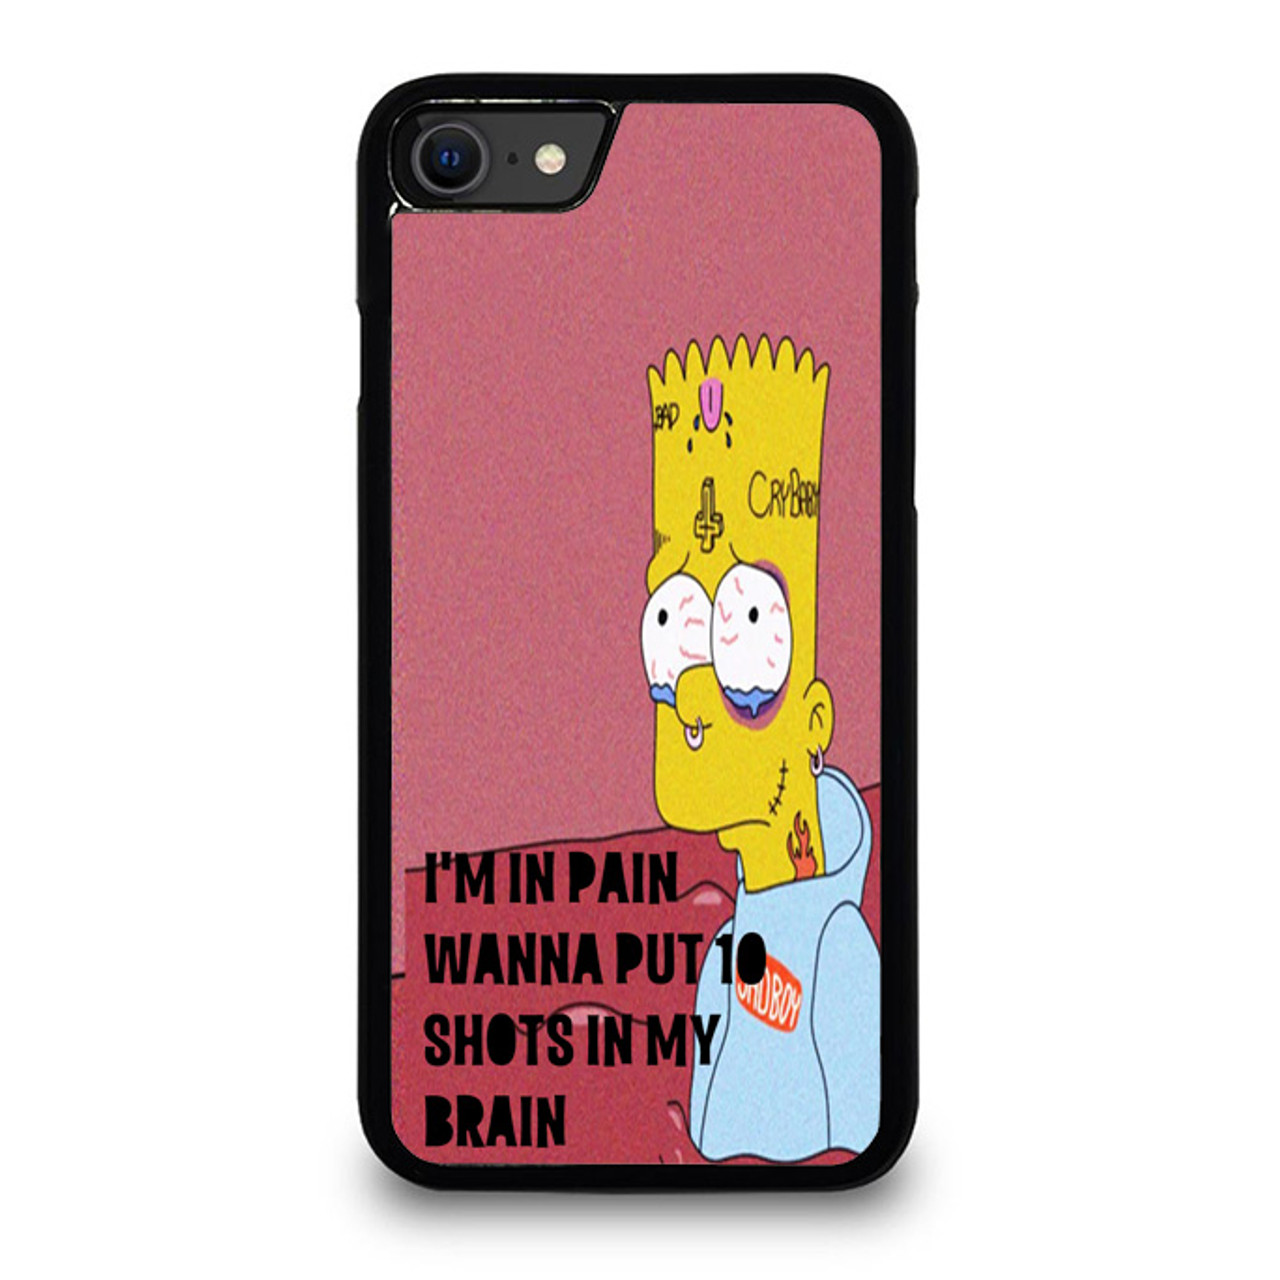 Sad Bart | iPhone Case